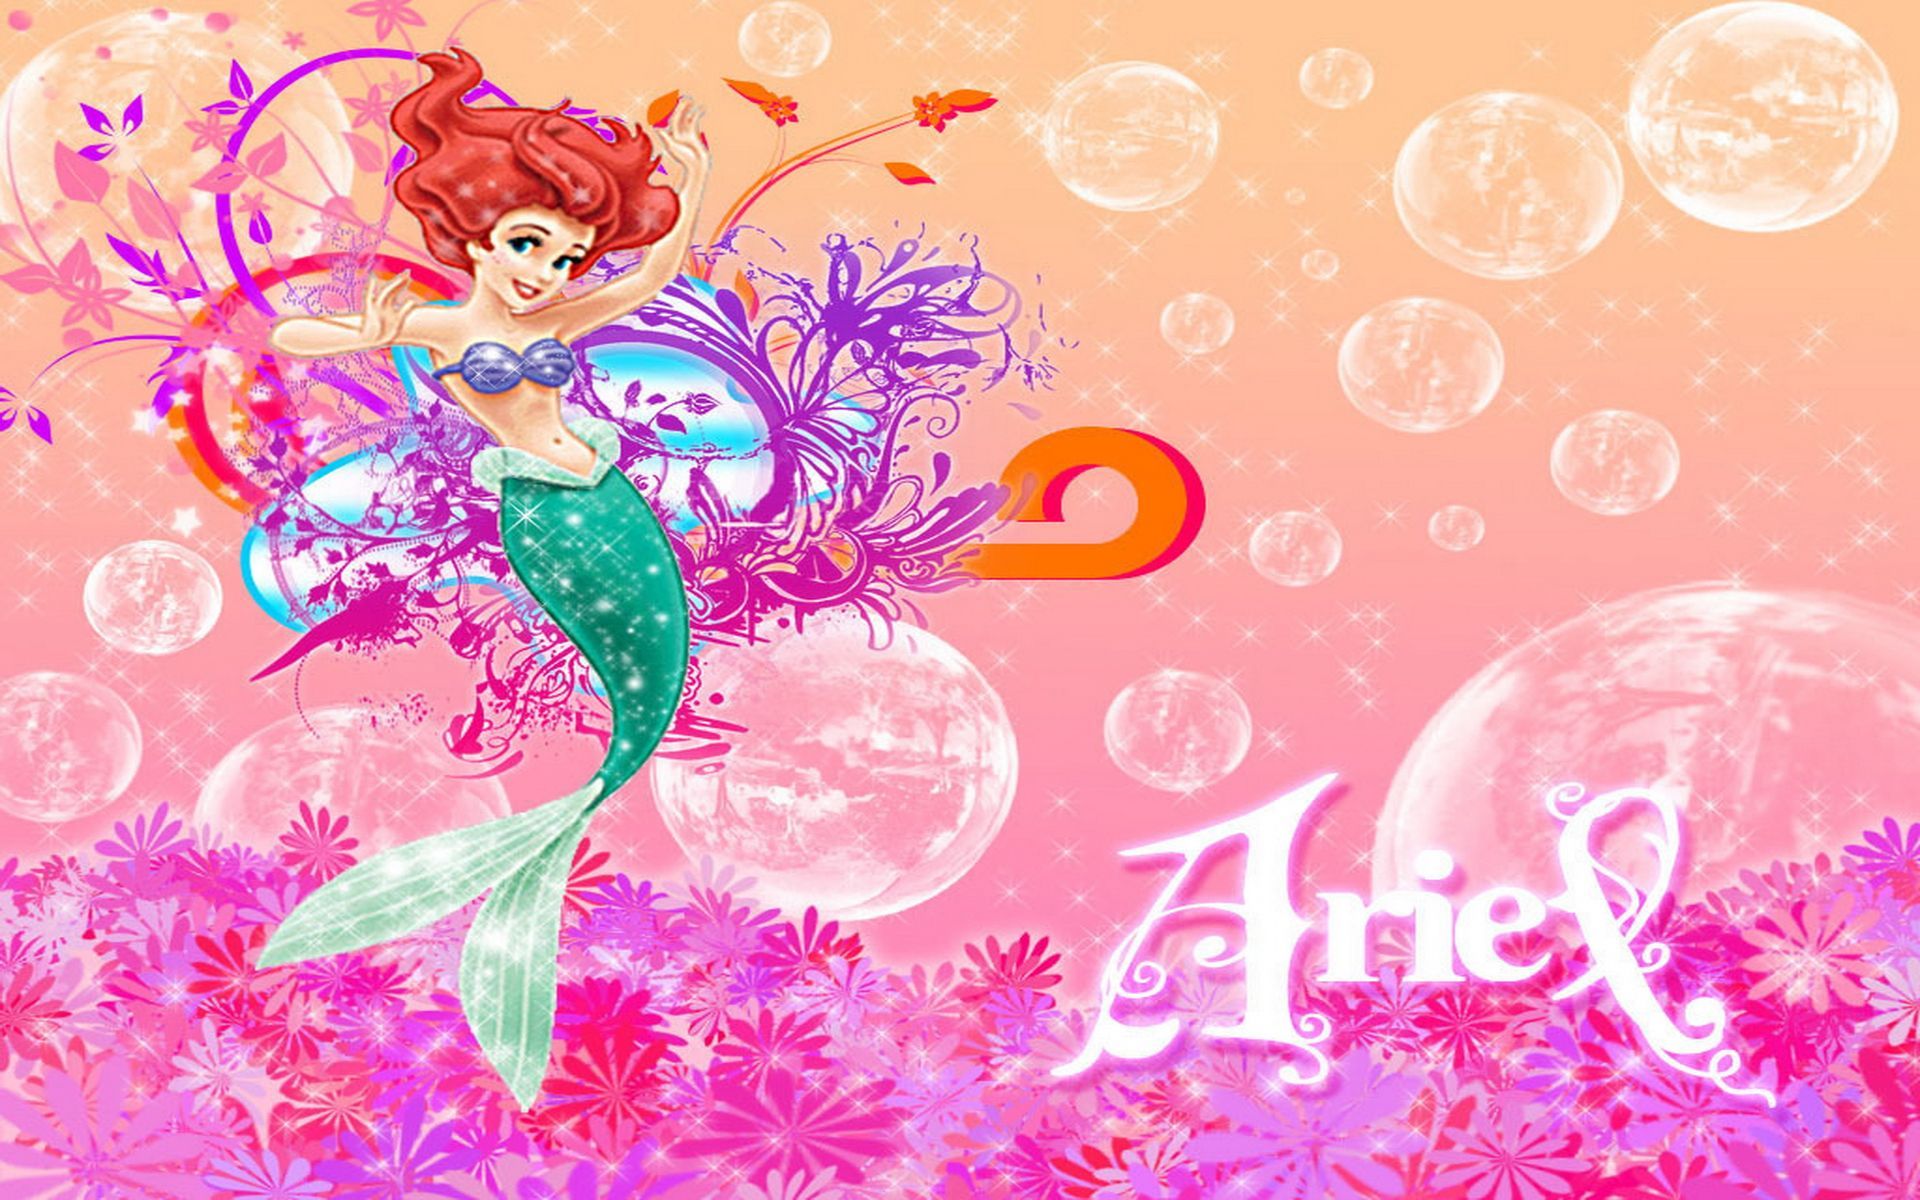 The Little Mermaid Princess Ariel Desktop Wallpaper. Foolhardi. Mermaid wallpaper, Little mermaid wallpaper, Disney princess wallpaper